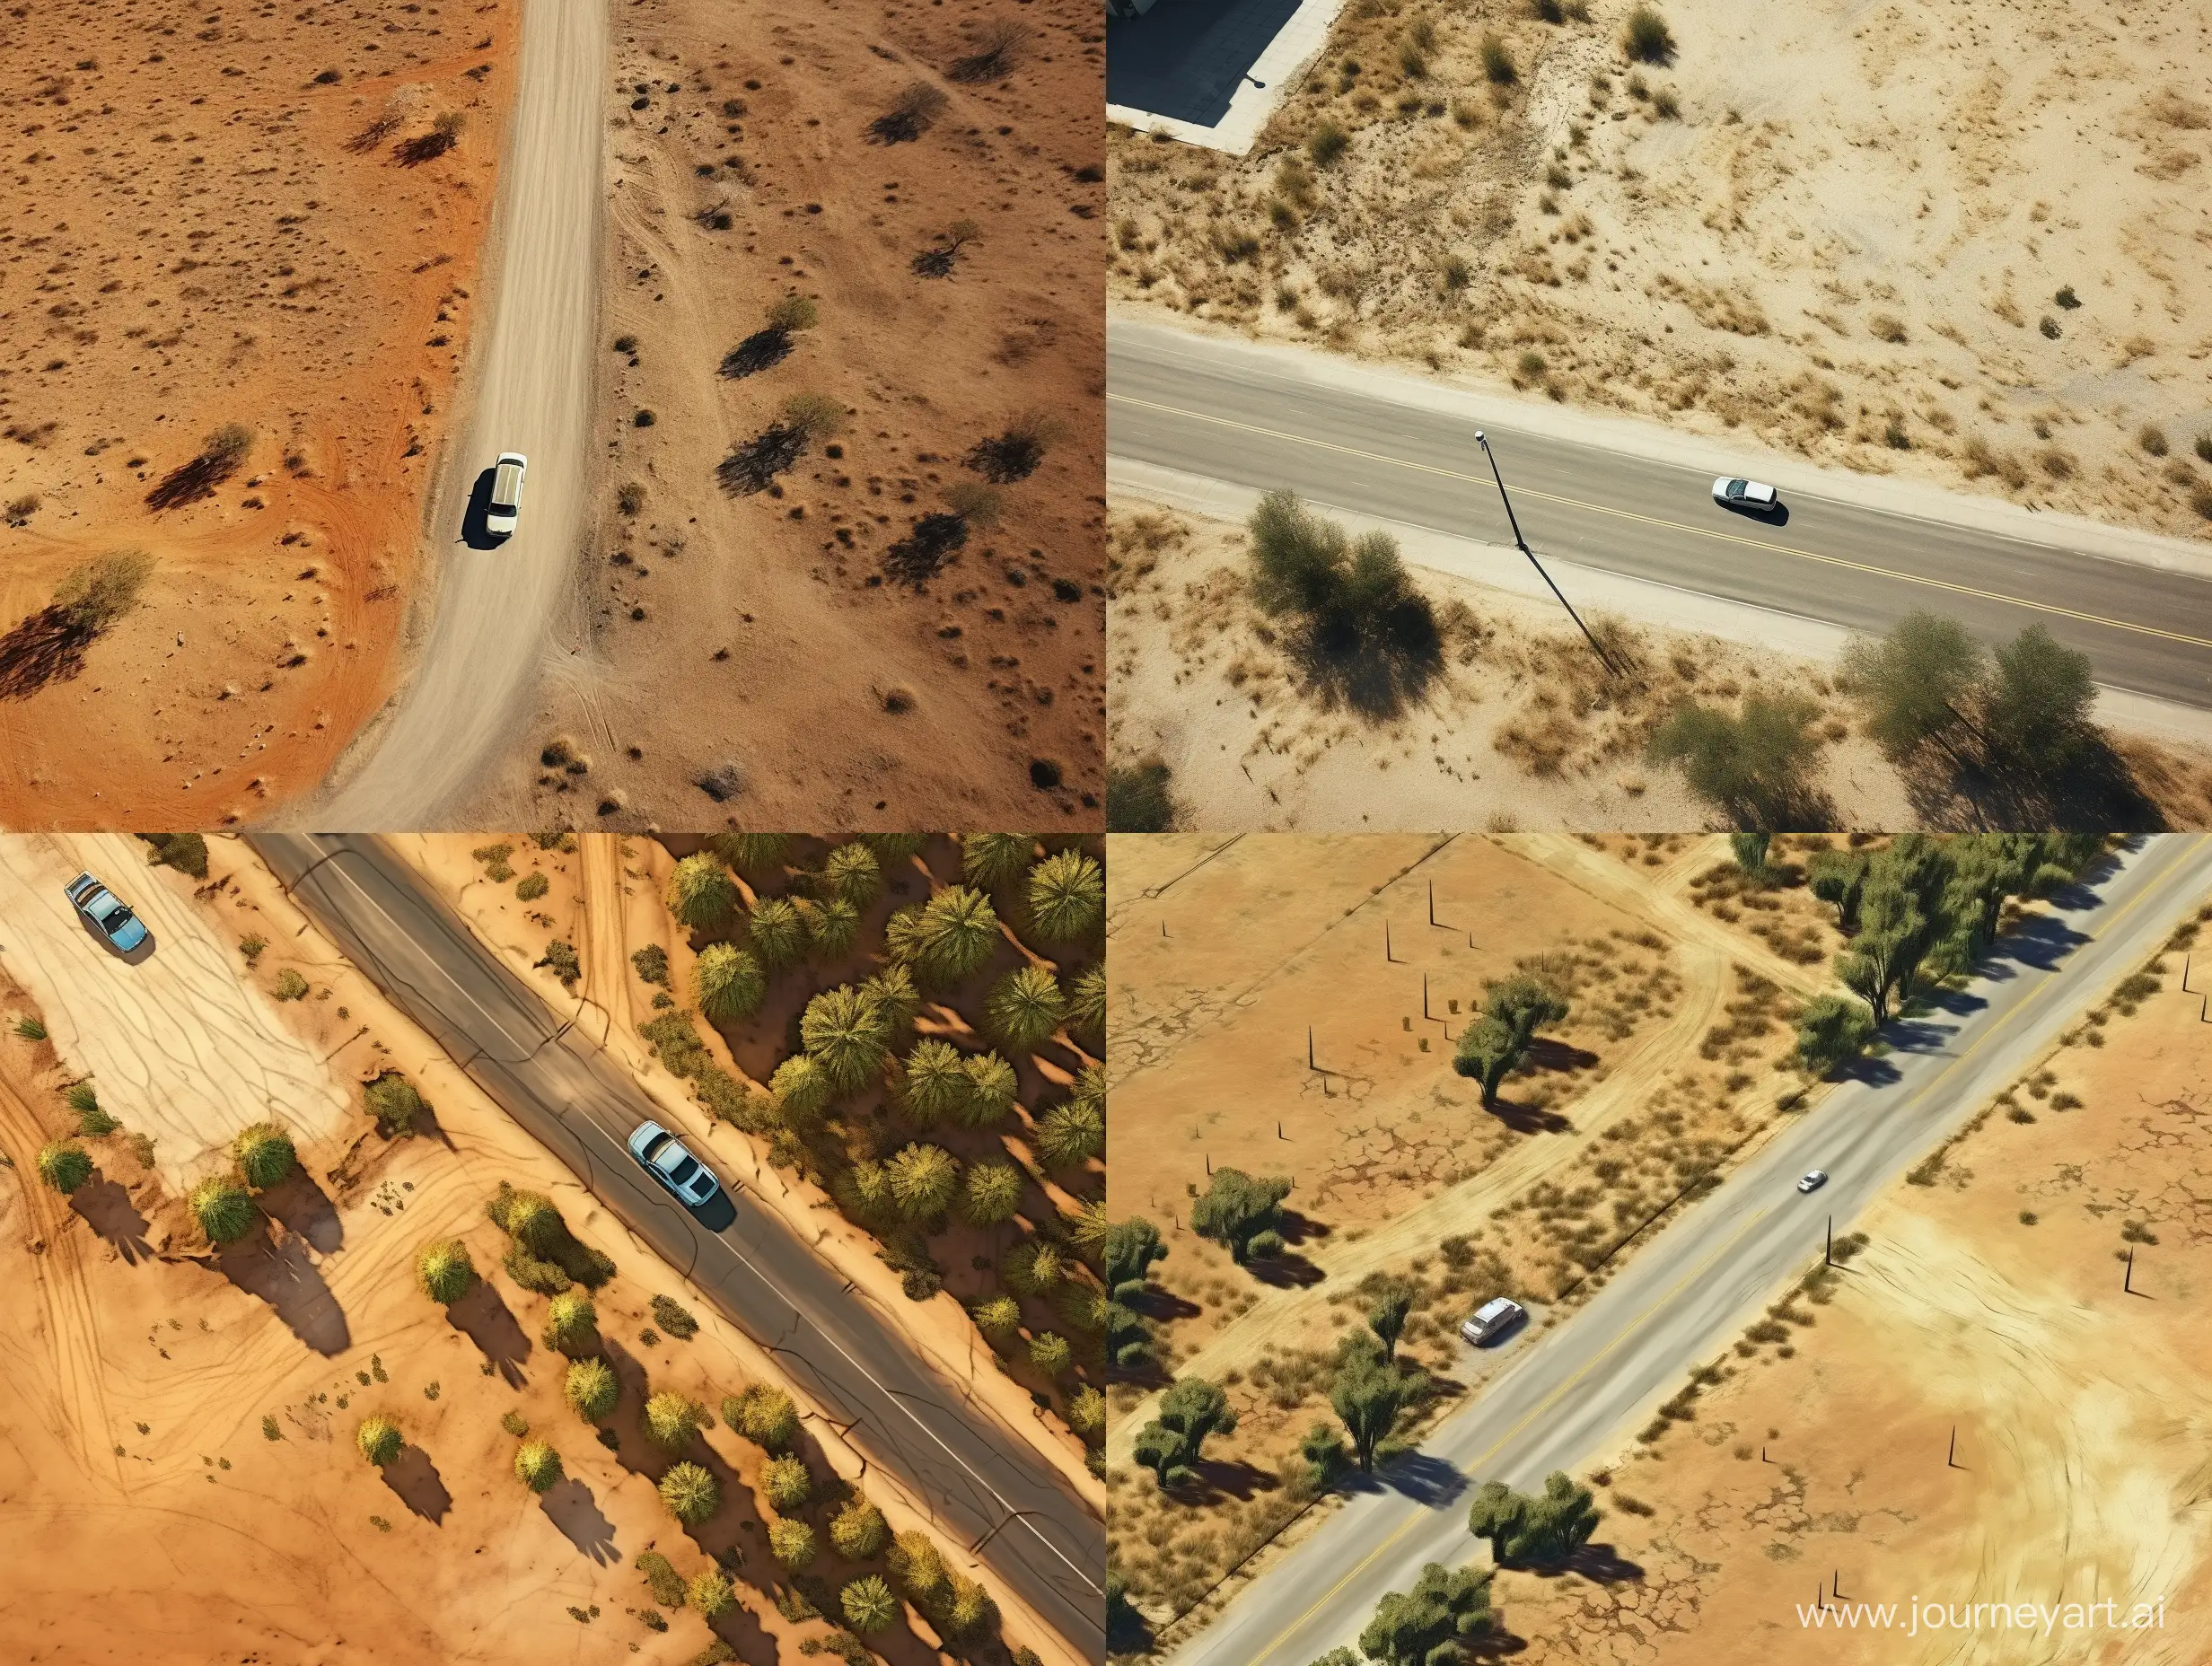 Diagonal-Asphalt-Road-Through-Desert-Landscape-with-Cars